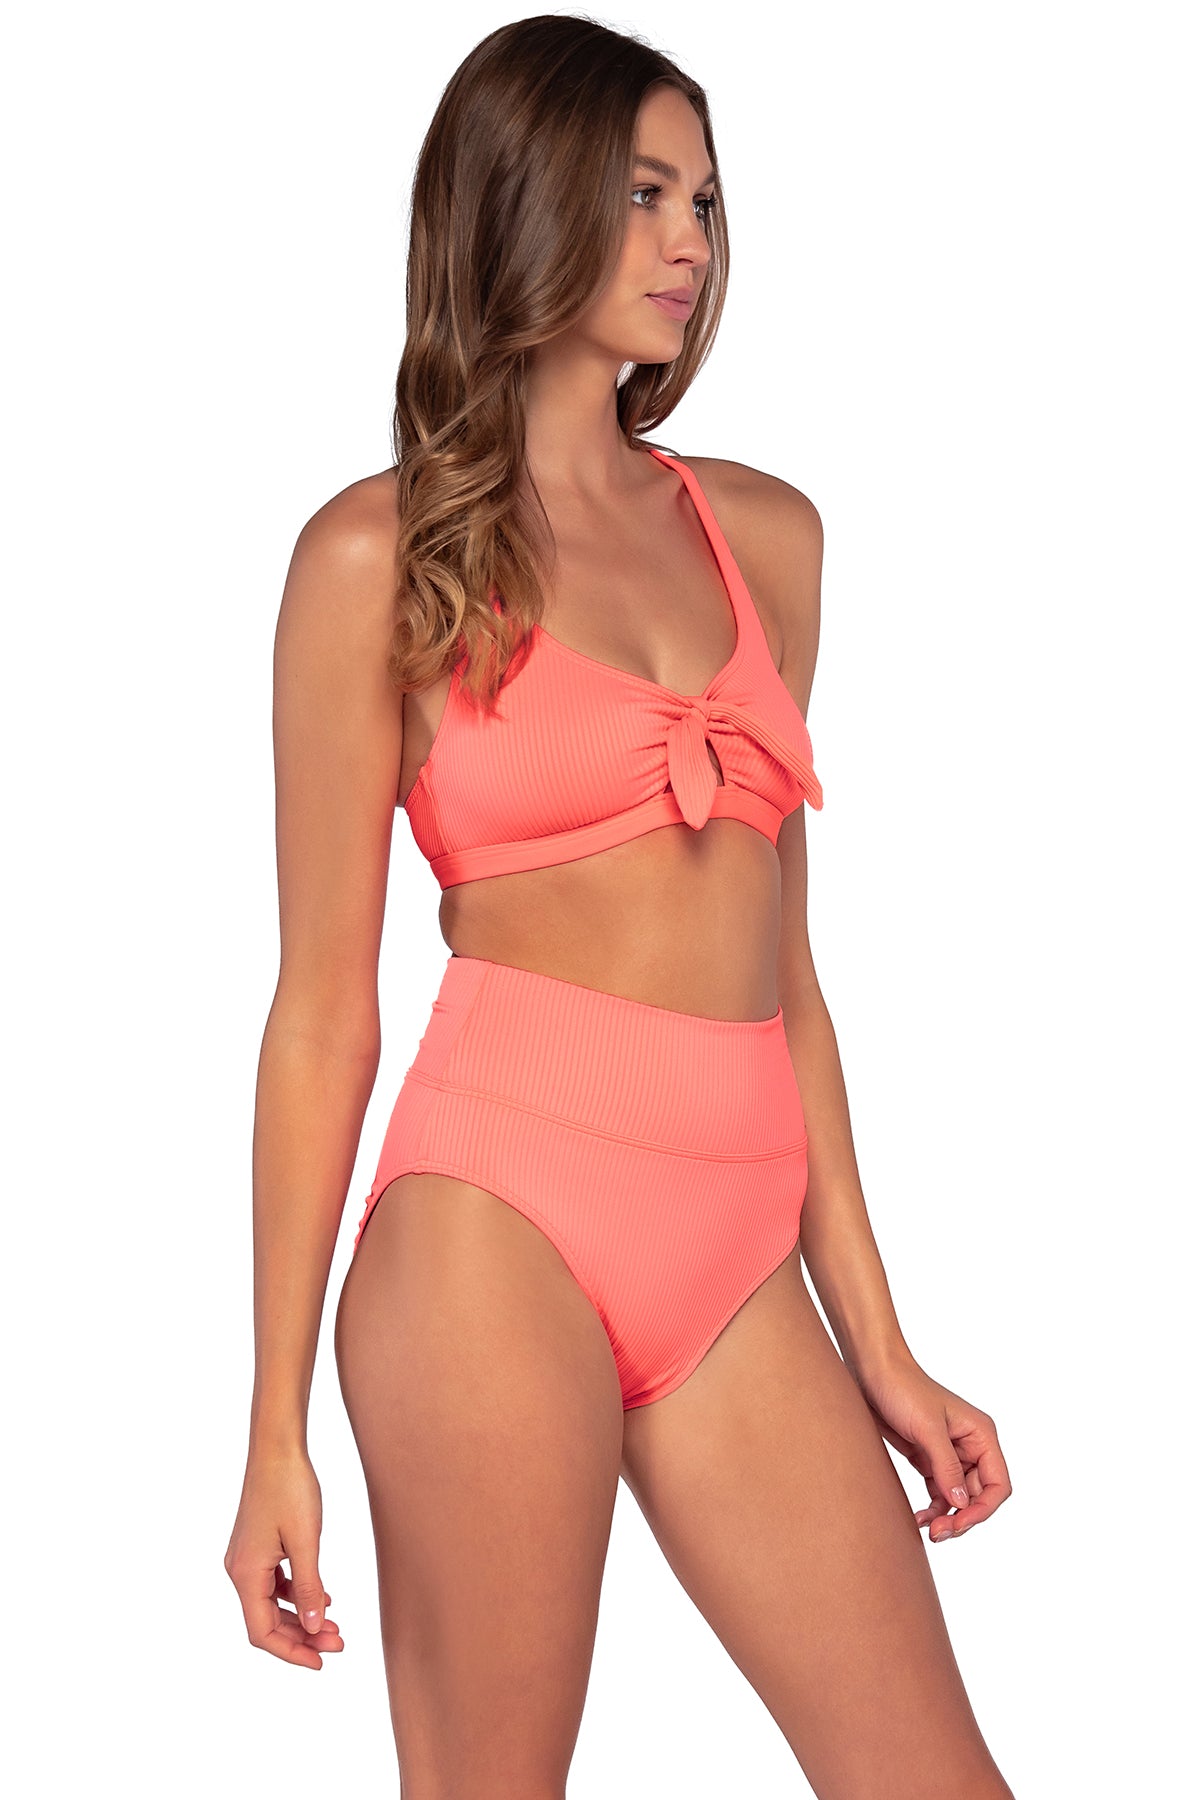 Side view of Sunsets Neon Coral Hannah High Waist Bottom with matching Brandi Bralette bikini top